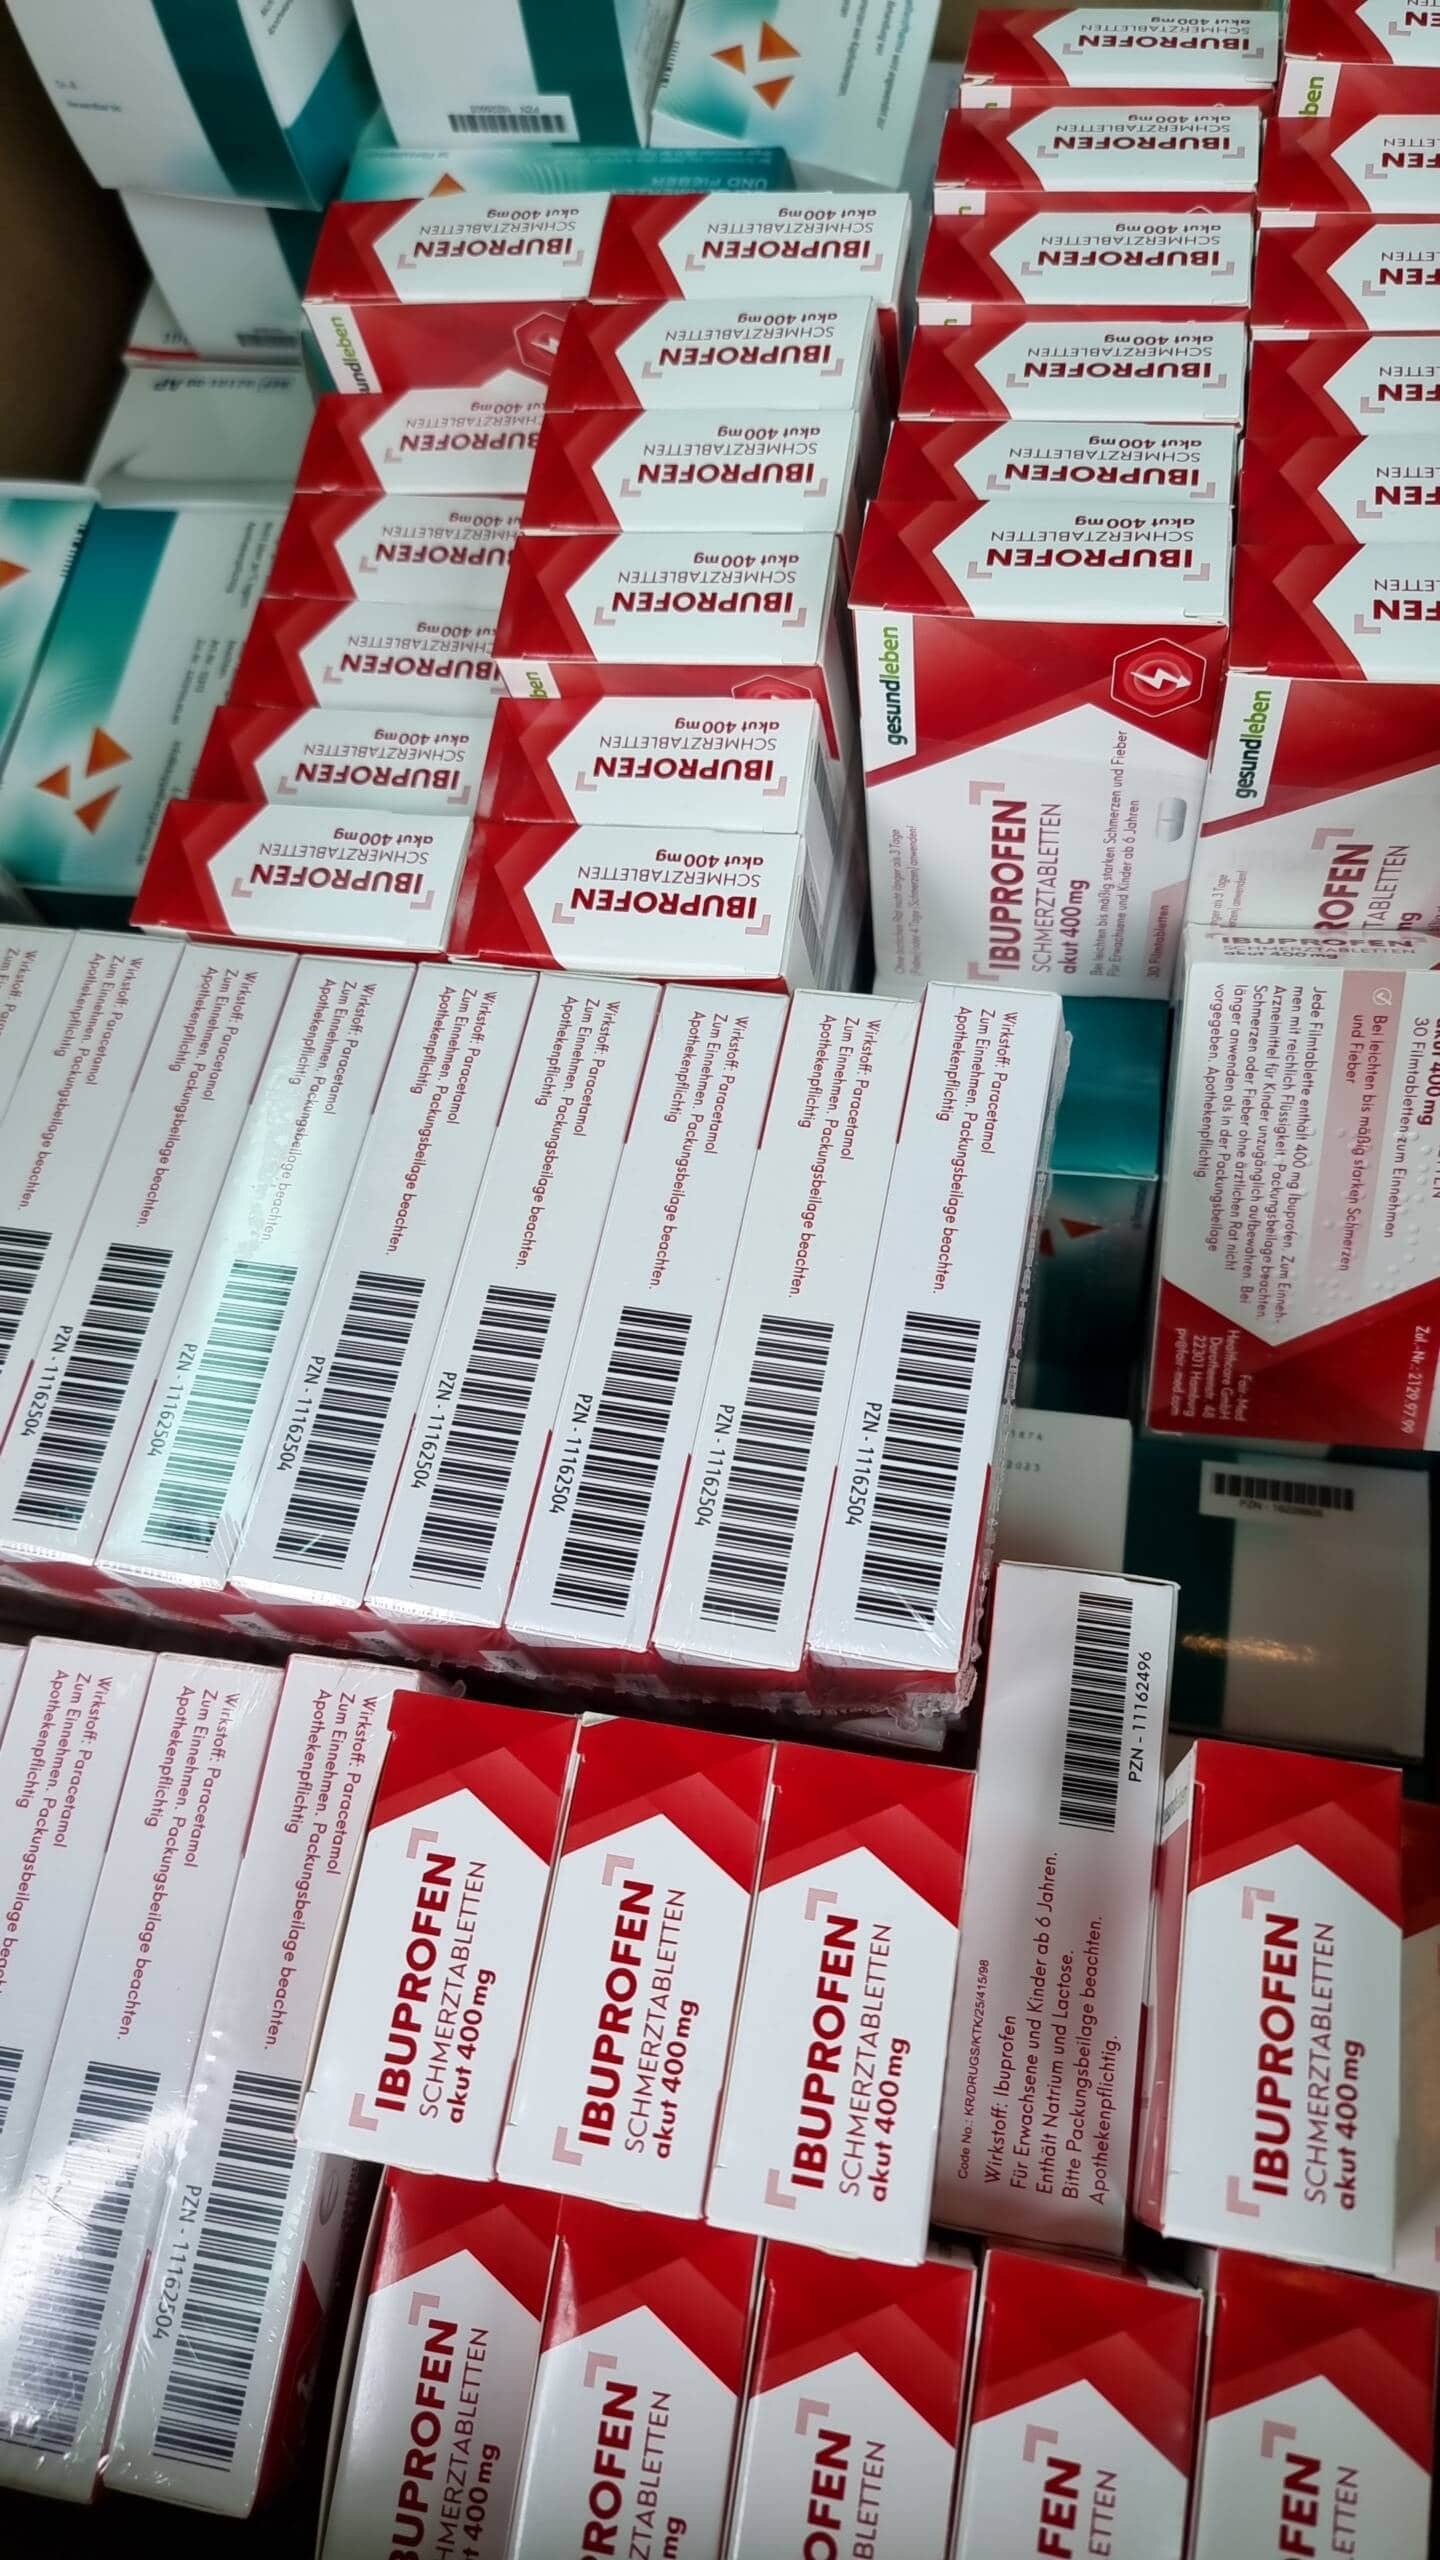 Medicines for Ukraine